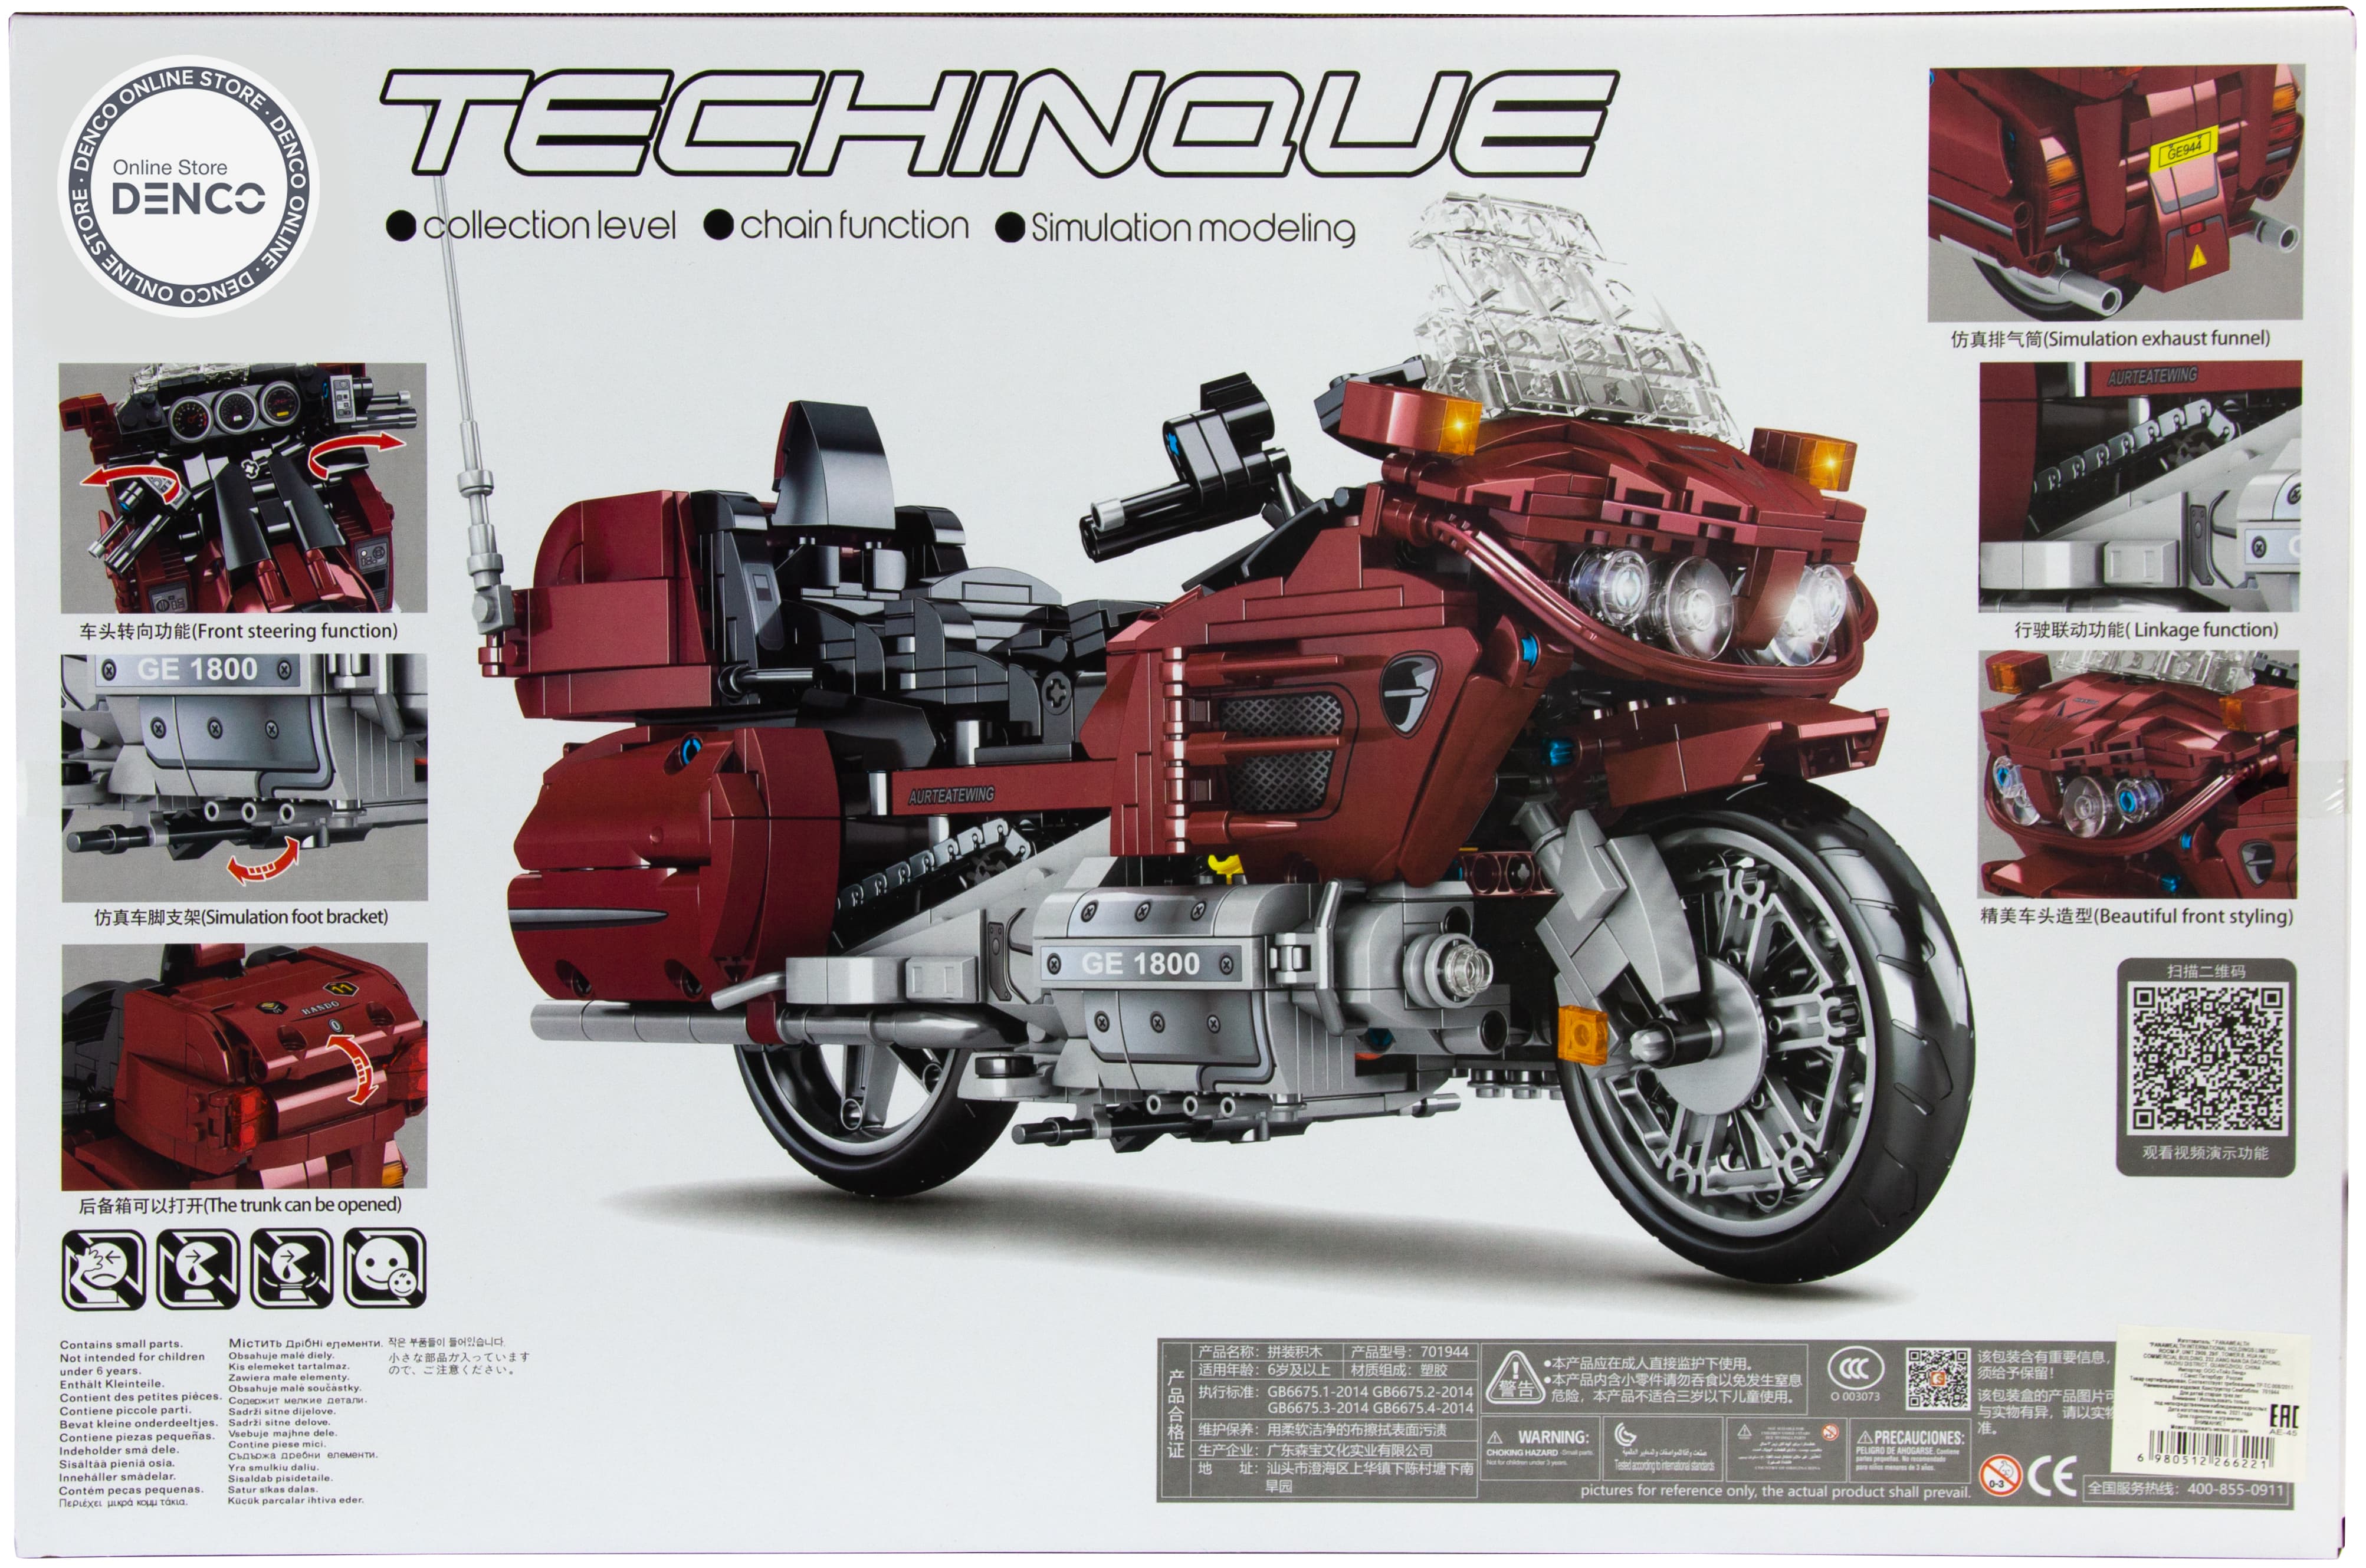 Конструктор Sembo Block «Мотоцикл Honda» 701944 / 1205 деталей